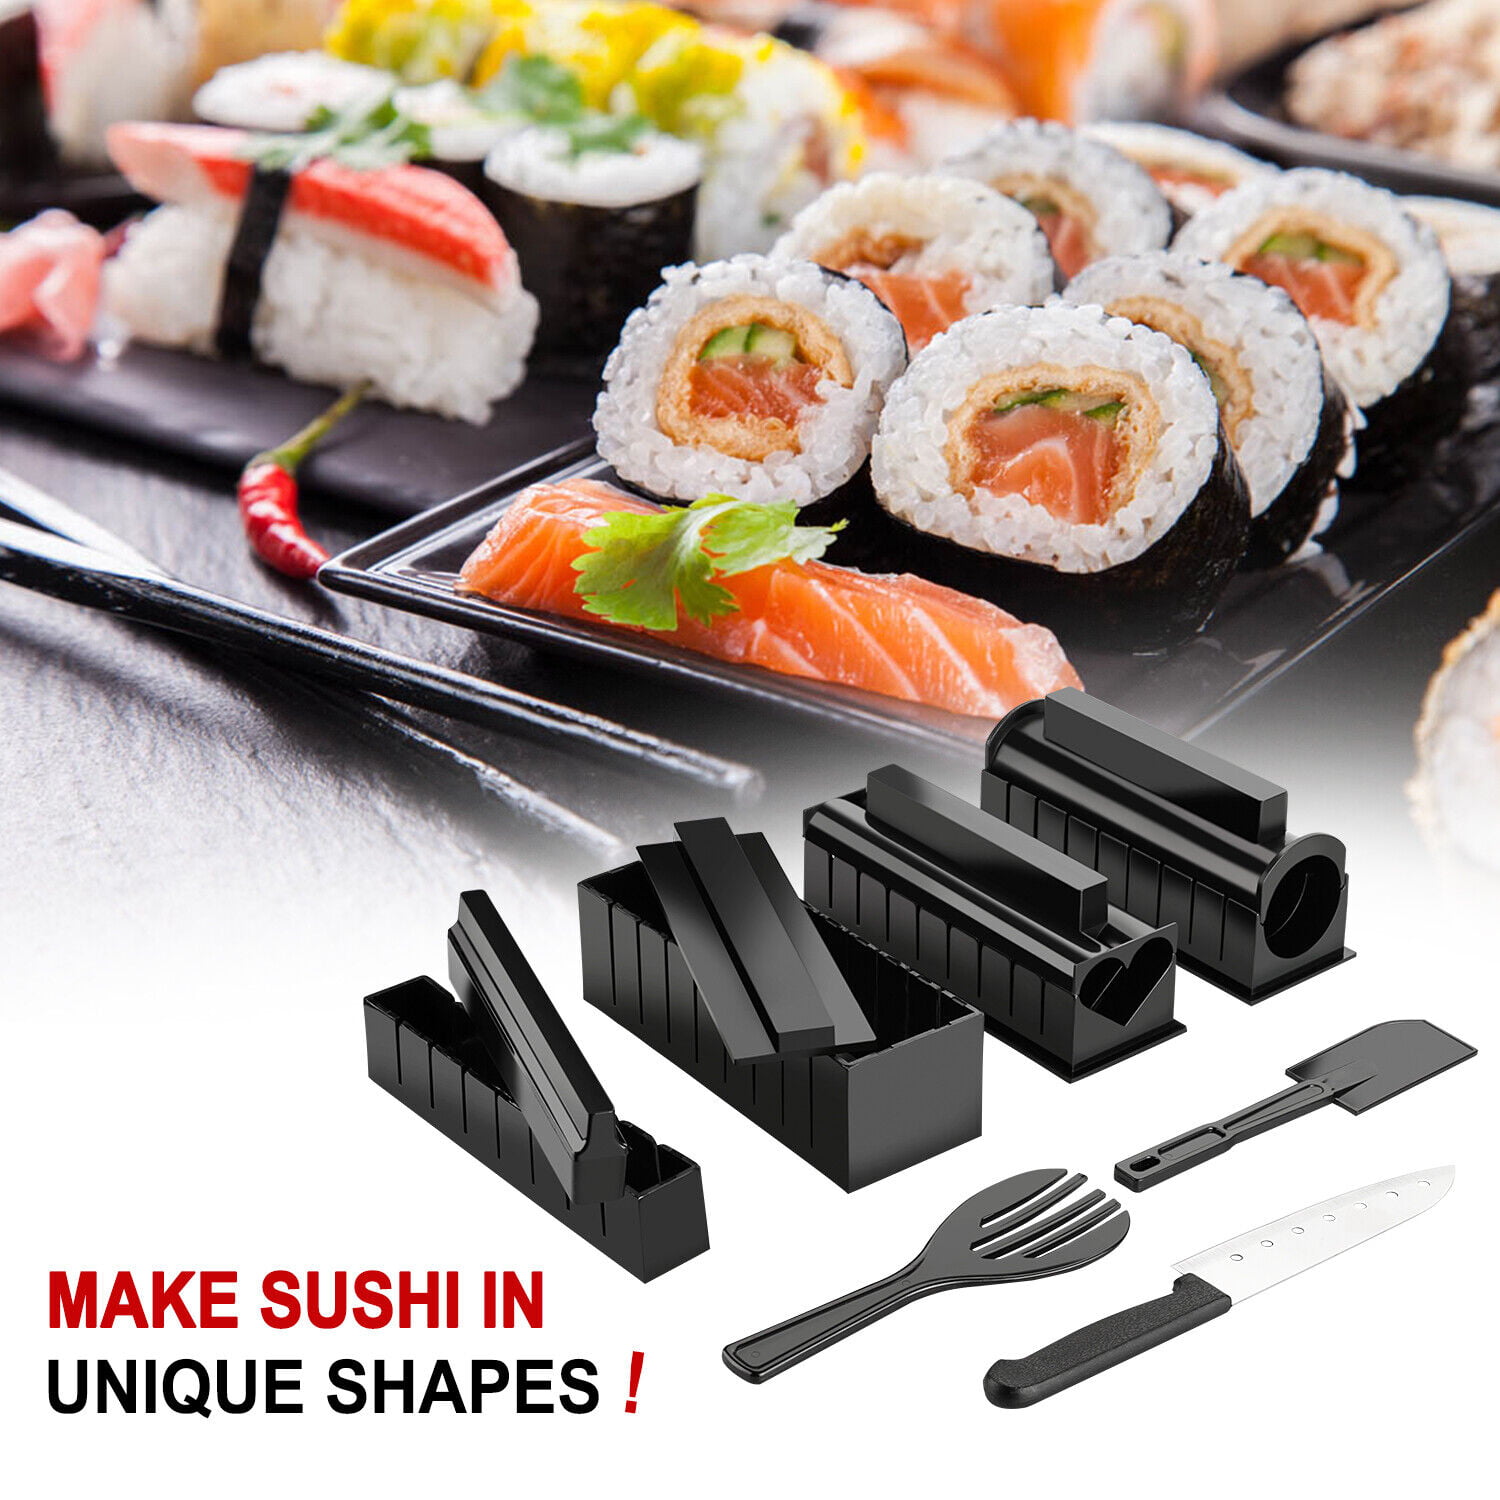 Sushi Making Kit - DIY Sushi Roller Mold Maker Kit, Home Sushi Mold Press  with Sushi Rice Roll Mold Shapes, Spatula, DIY Home Sushi Tool Reusable 